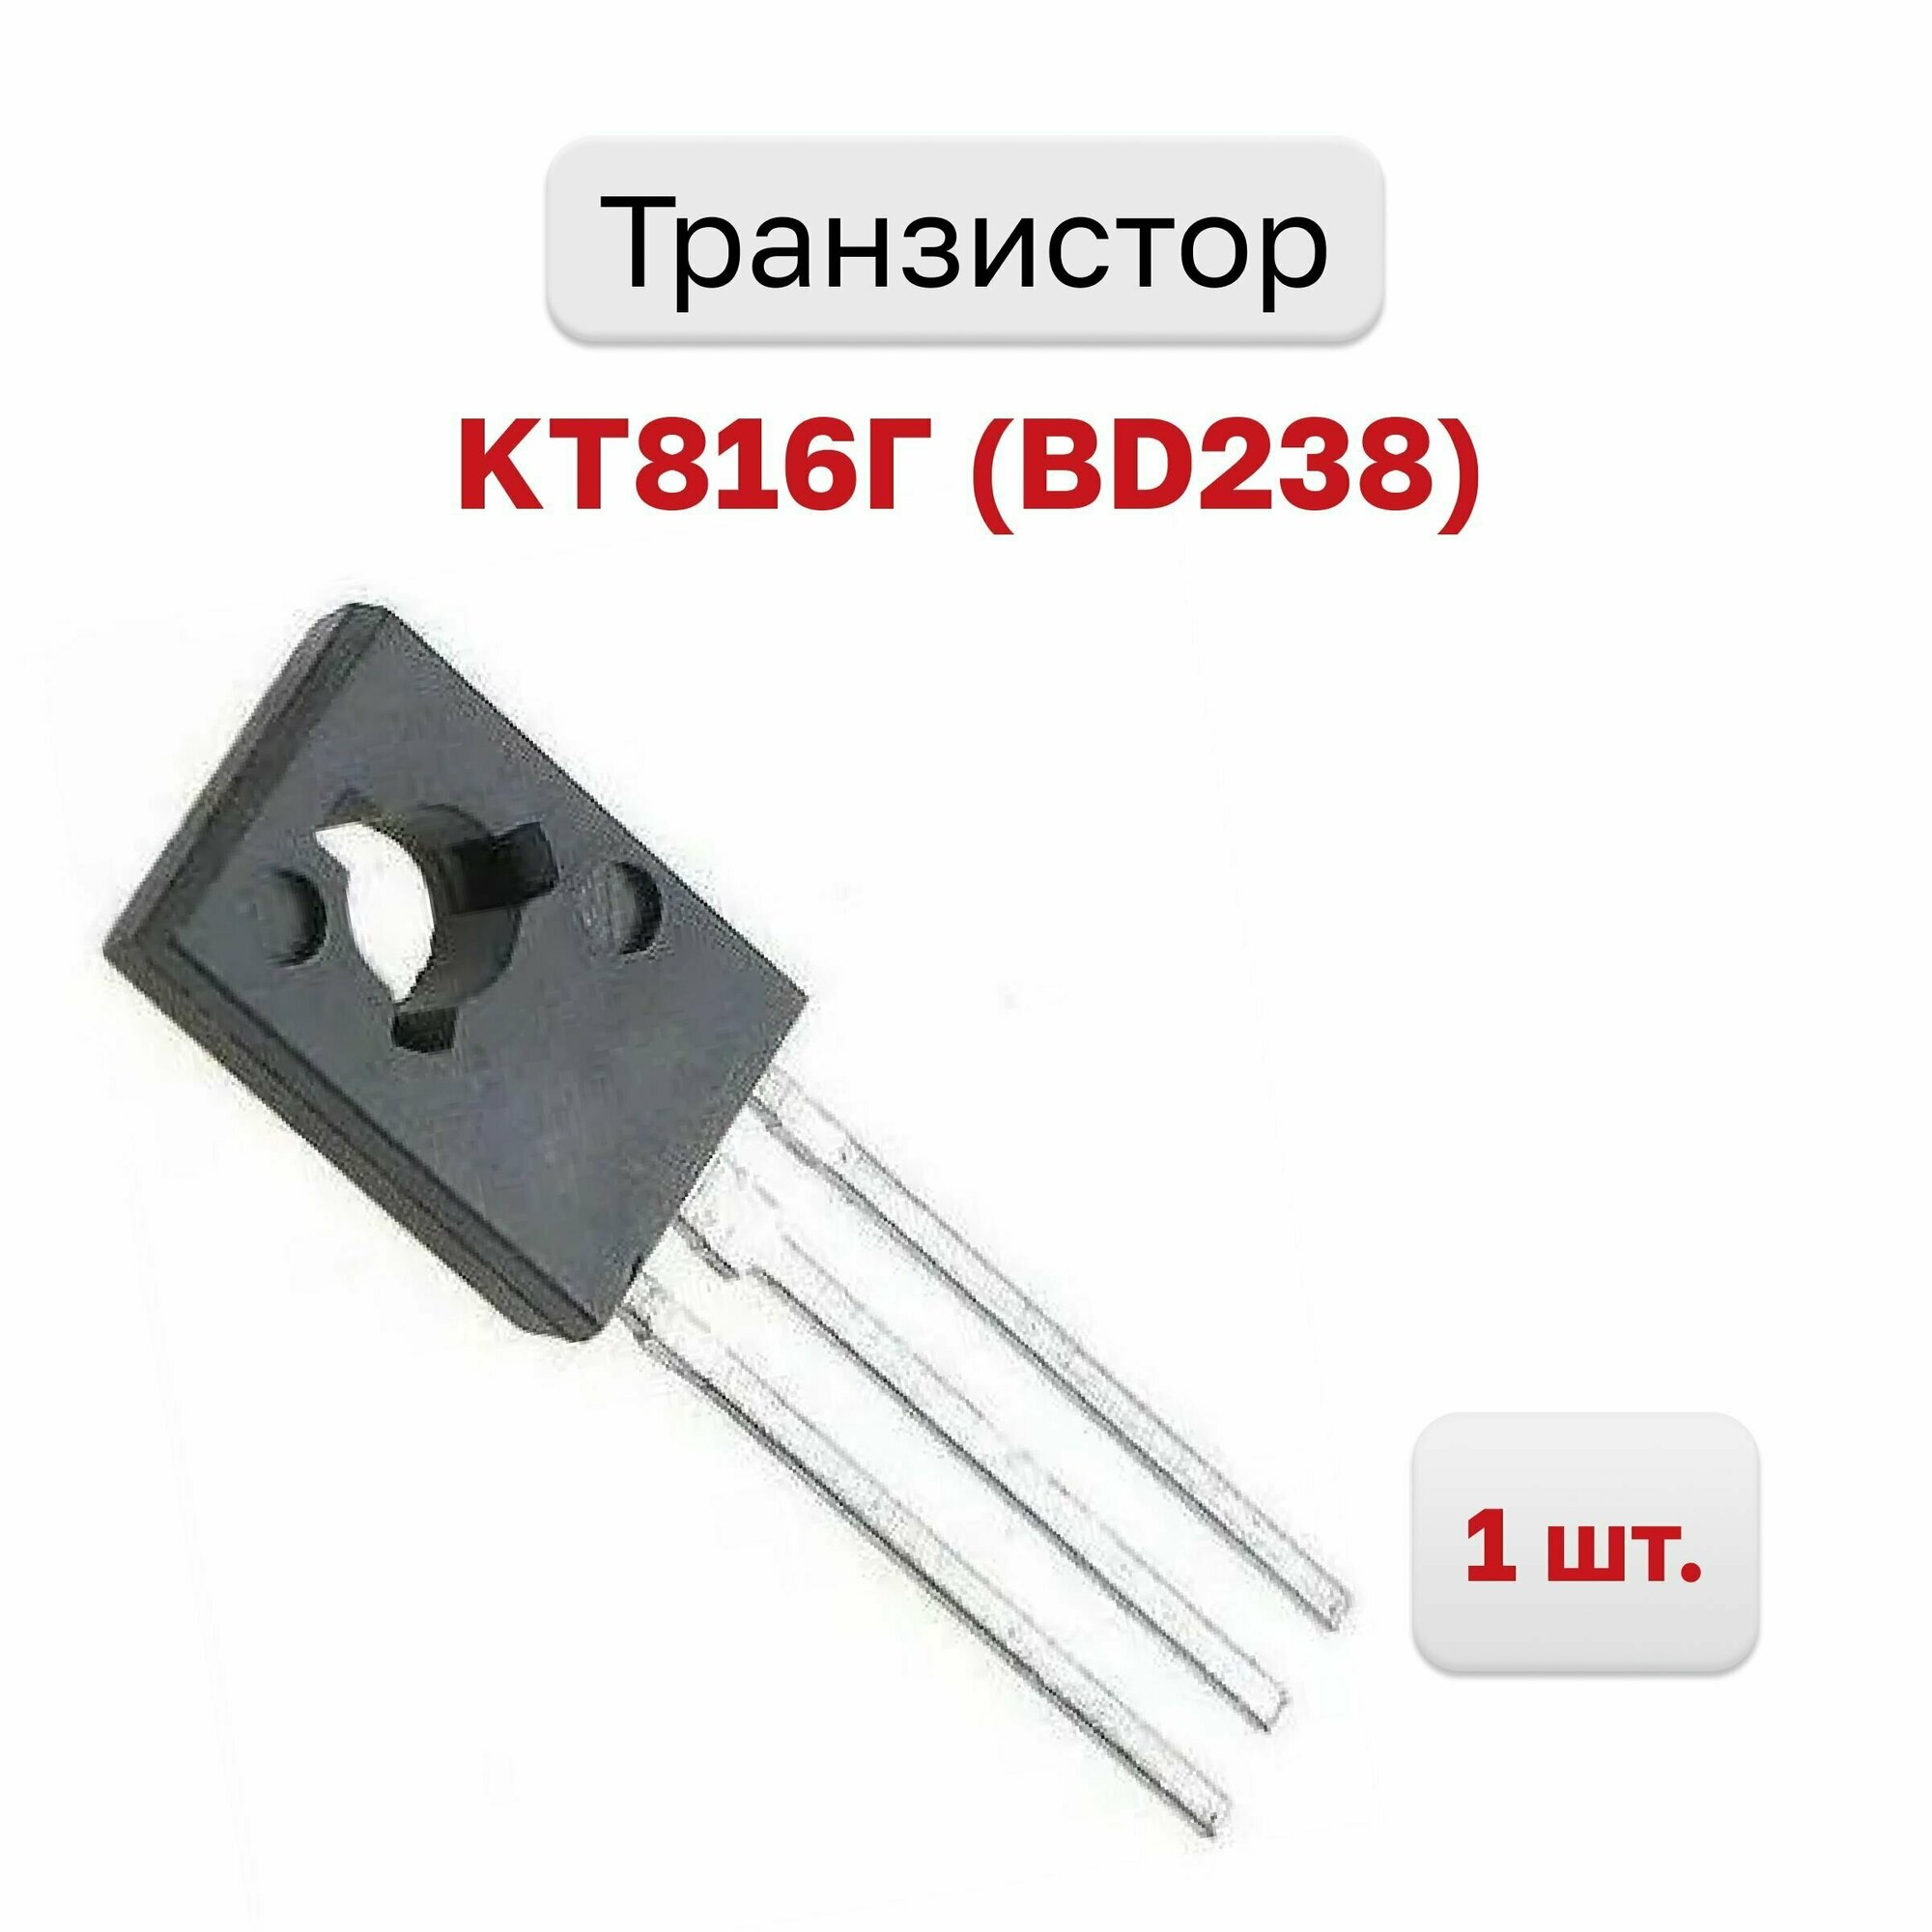 Транзистор КТ816Г (BD238), 1 шт.